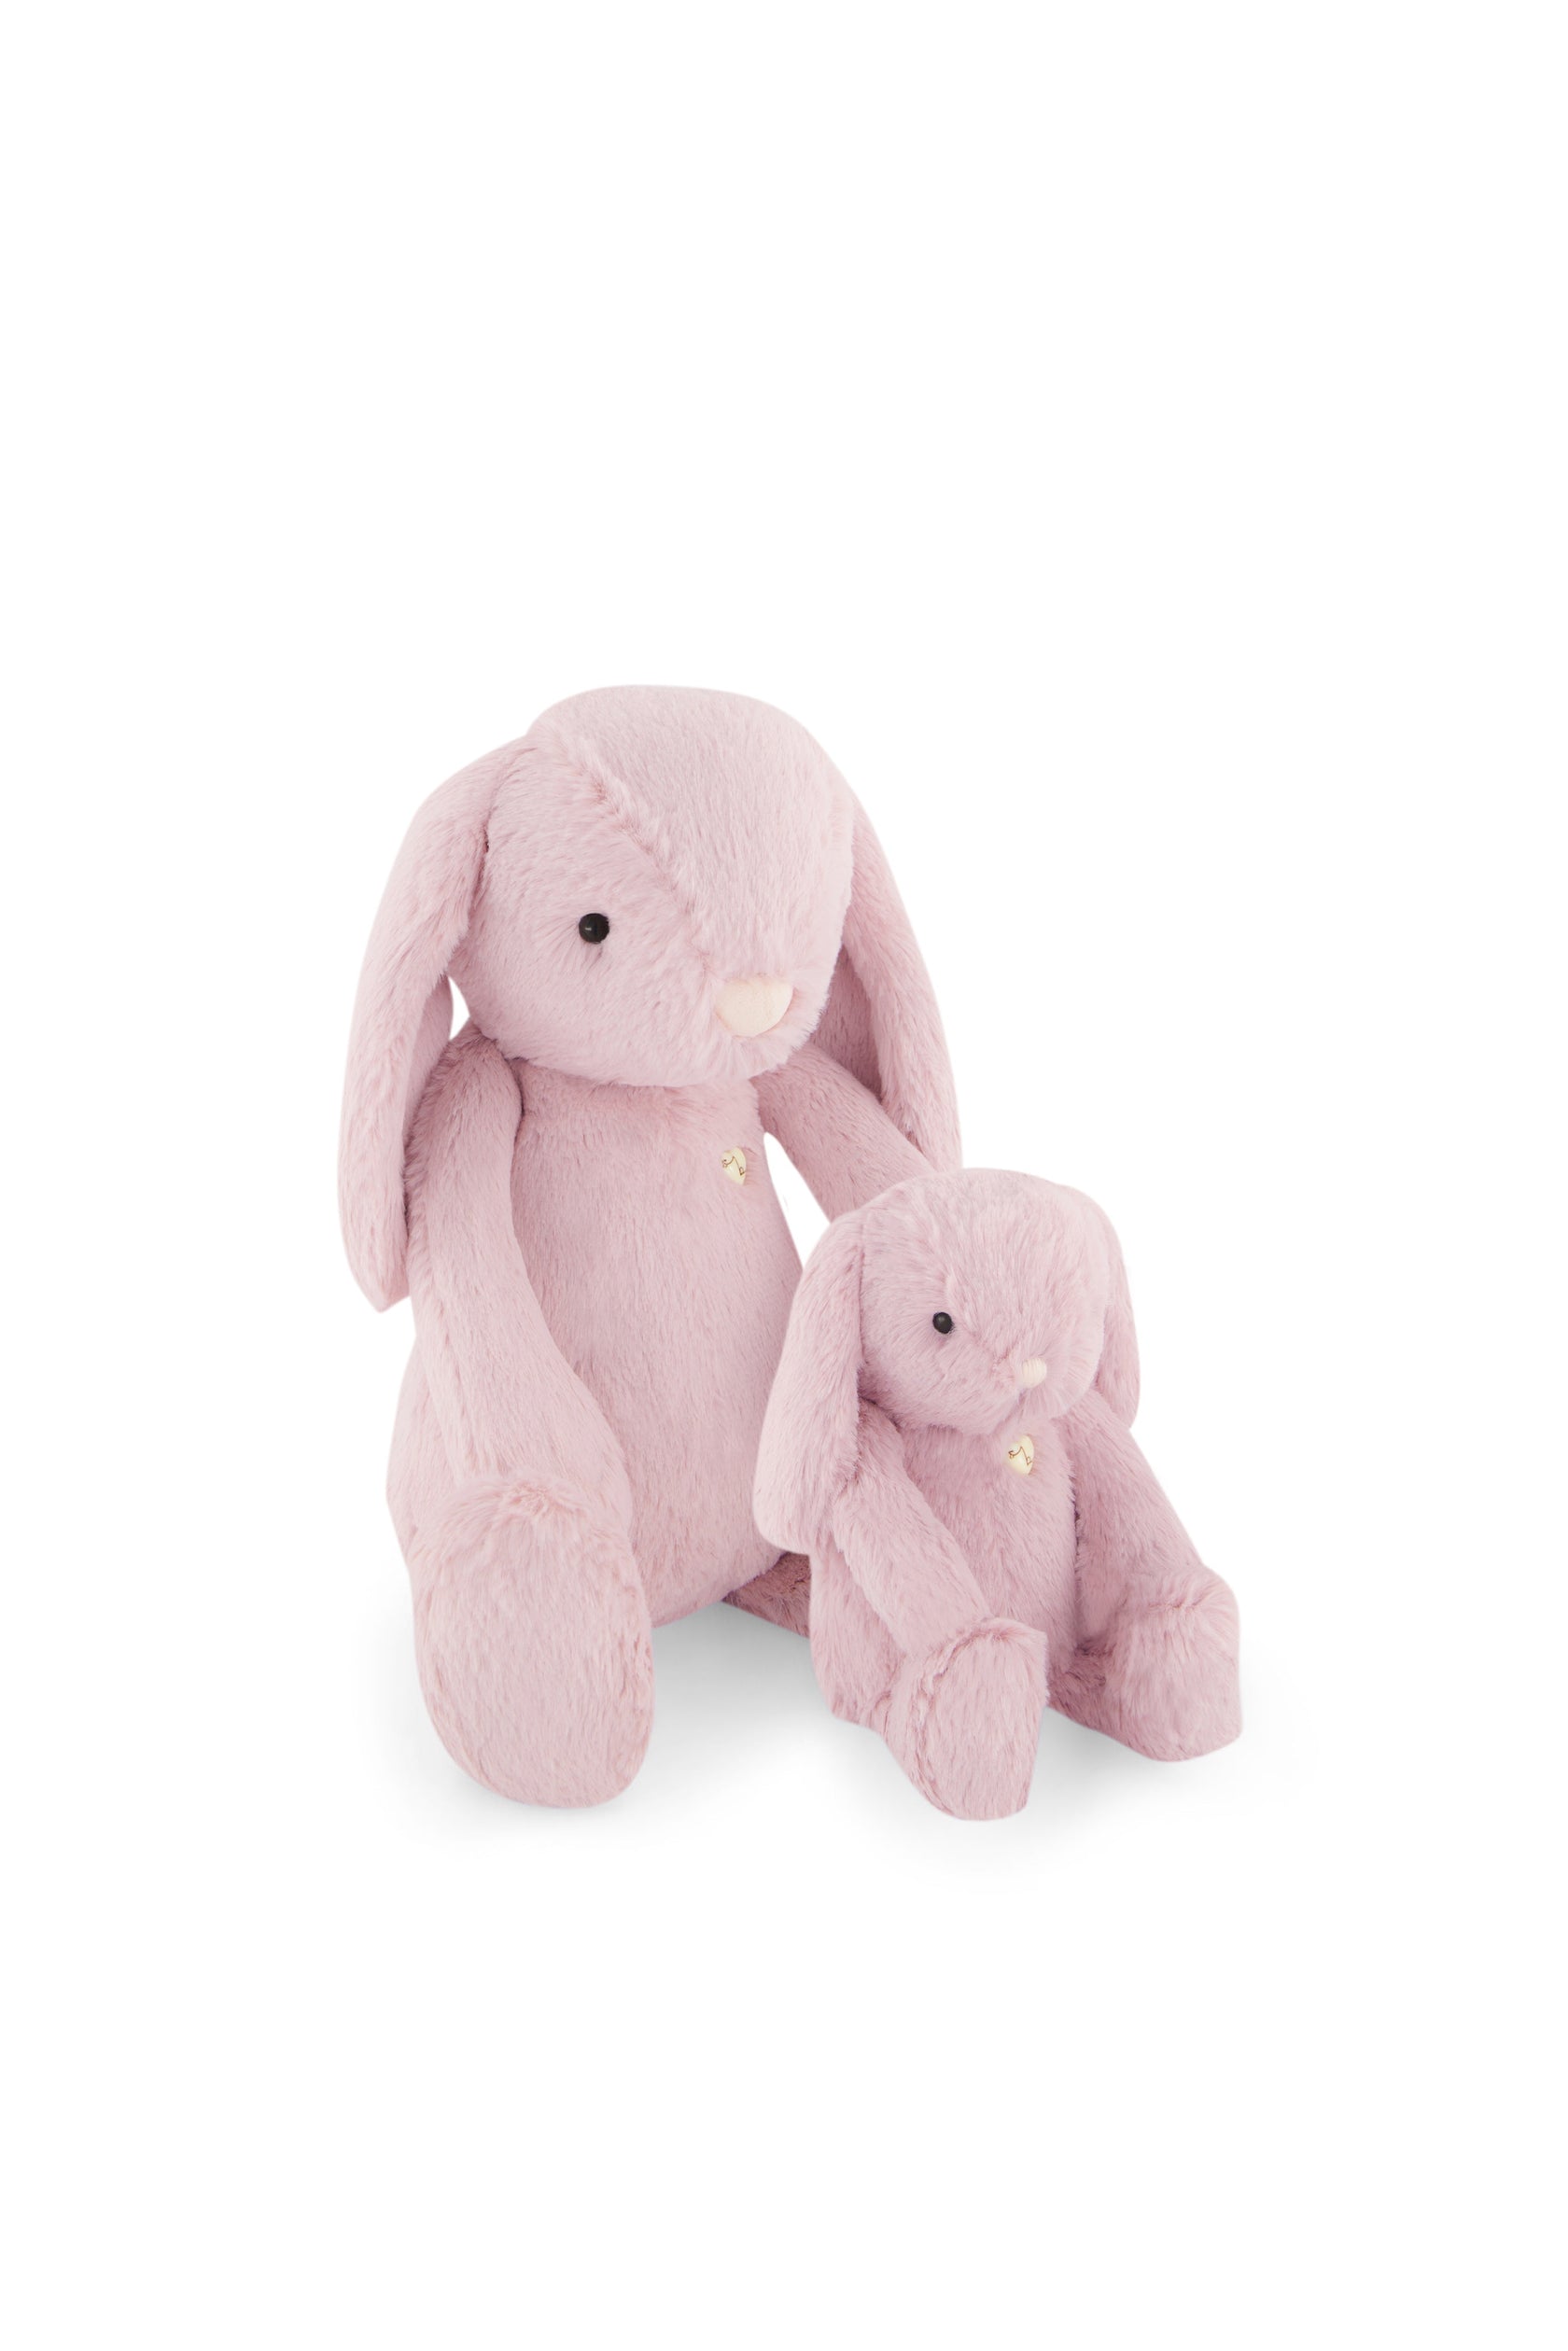 Snuggle Bunnies - Penelope the Bunny - Powder Pink